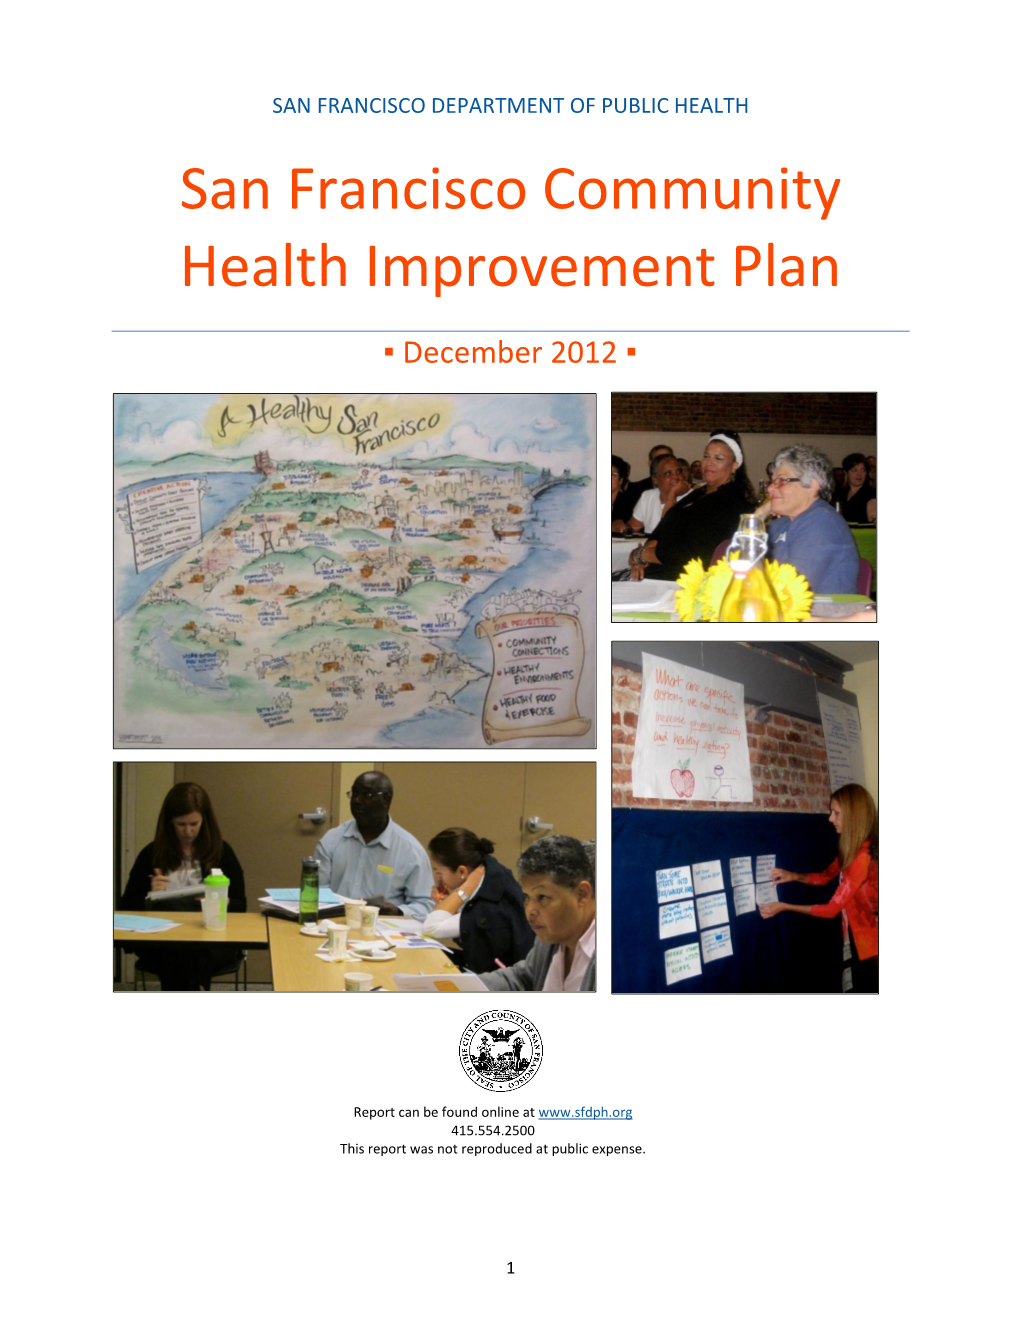 San Francisco Community Health Improvement Plan